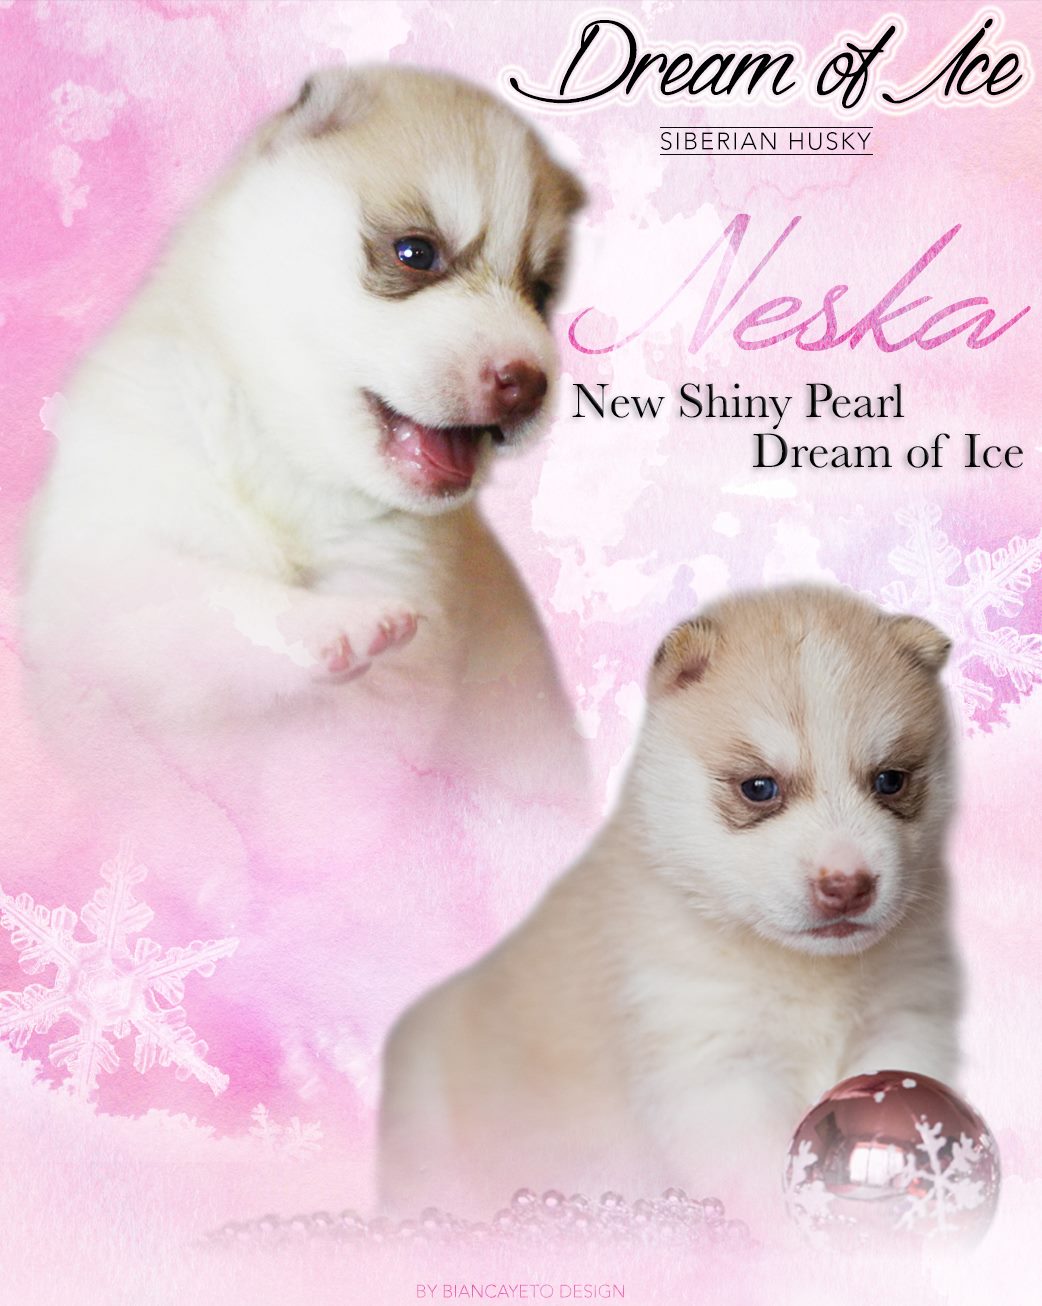 New shiny pearl Dream Of Ice